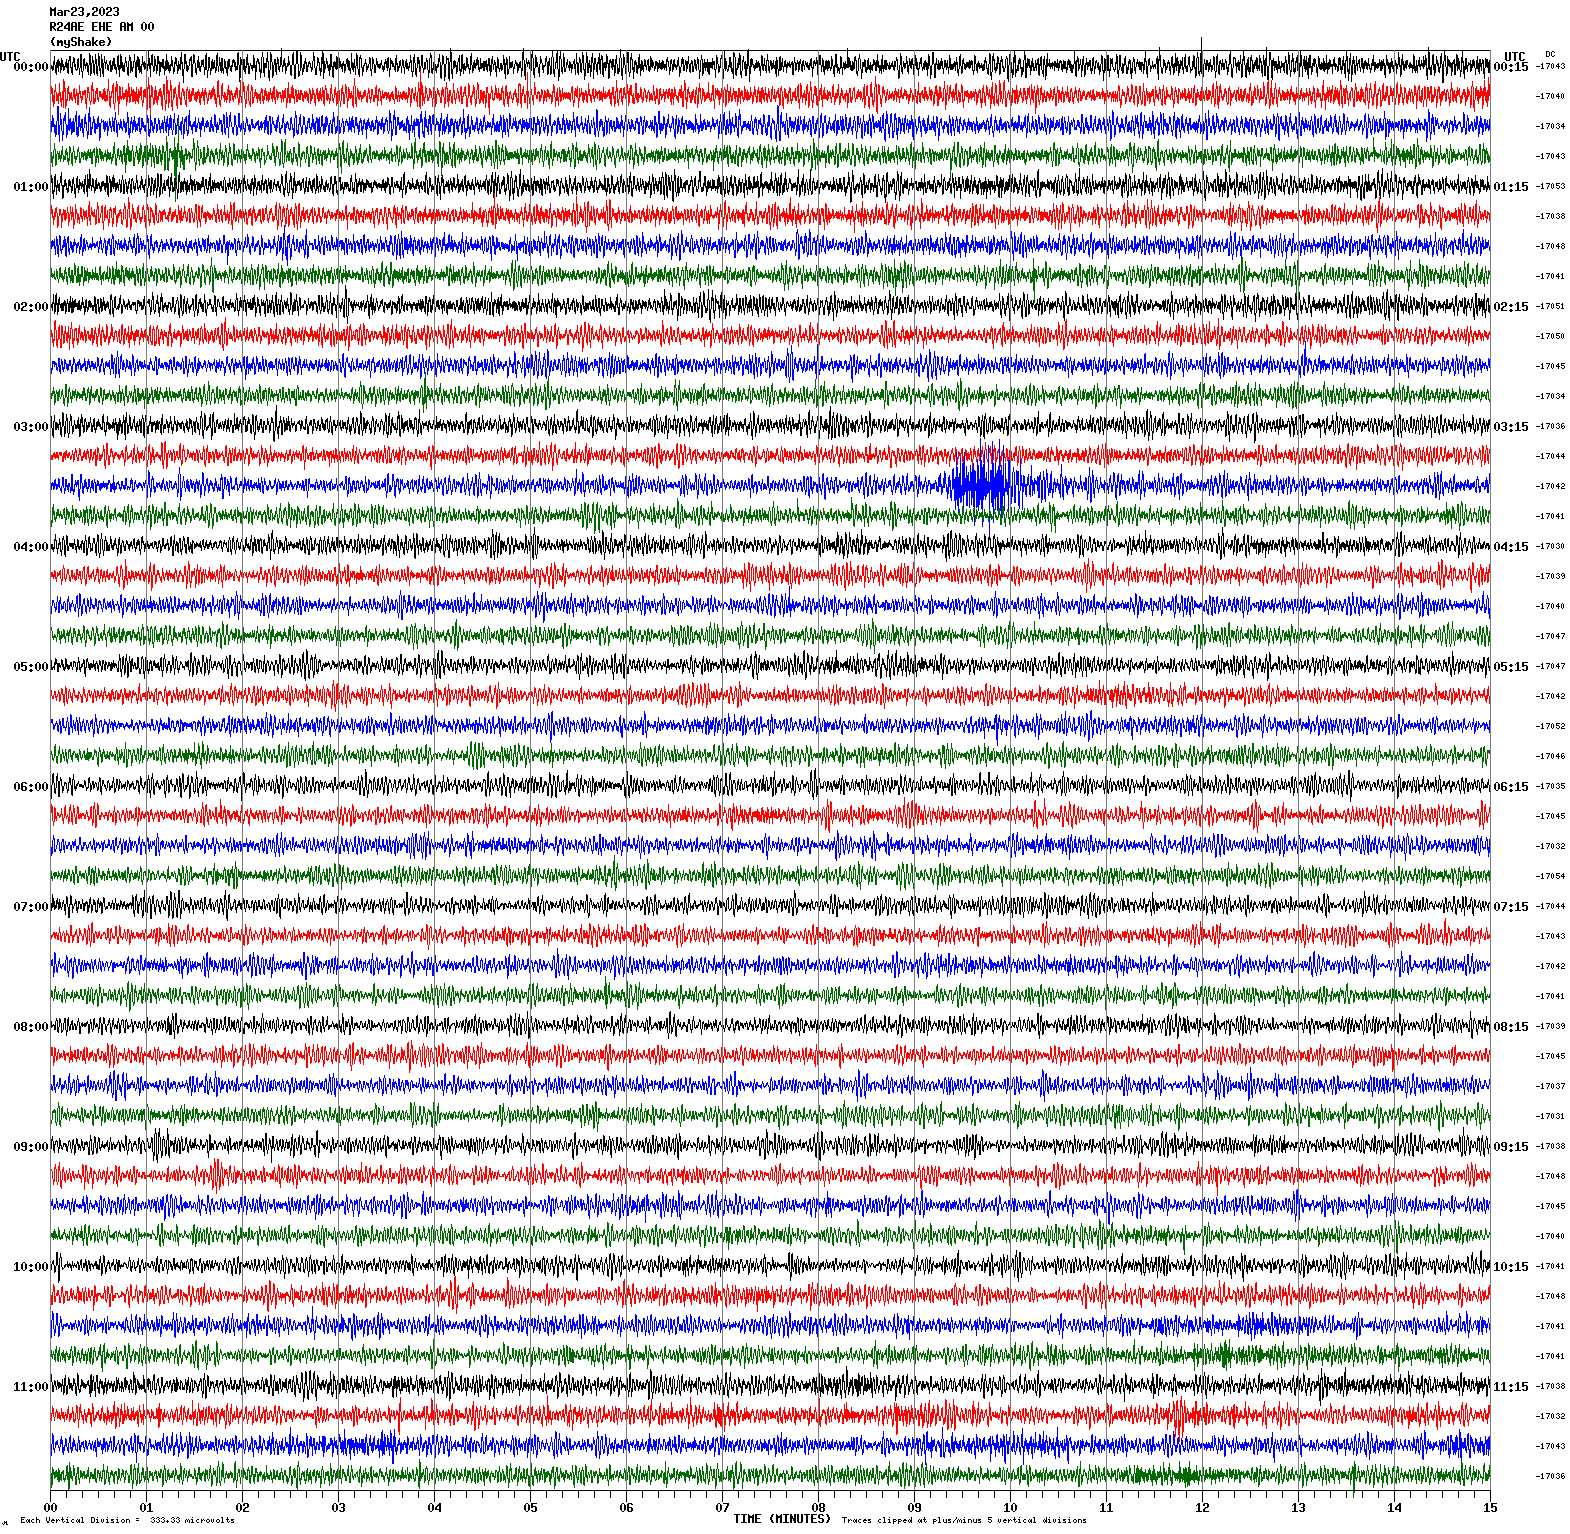 /seismic-data/R24AE/R24AE_EHE_AM_00.2023032300.gif